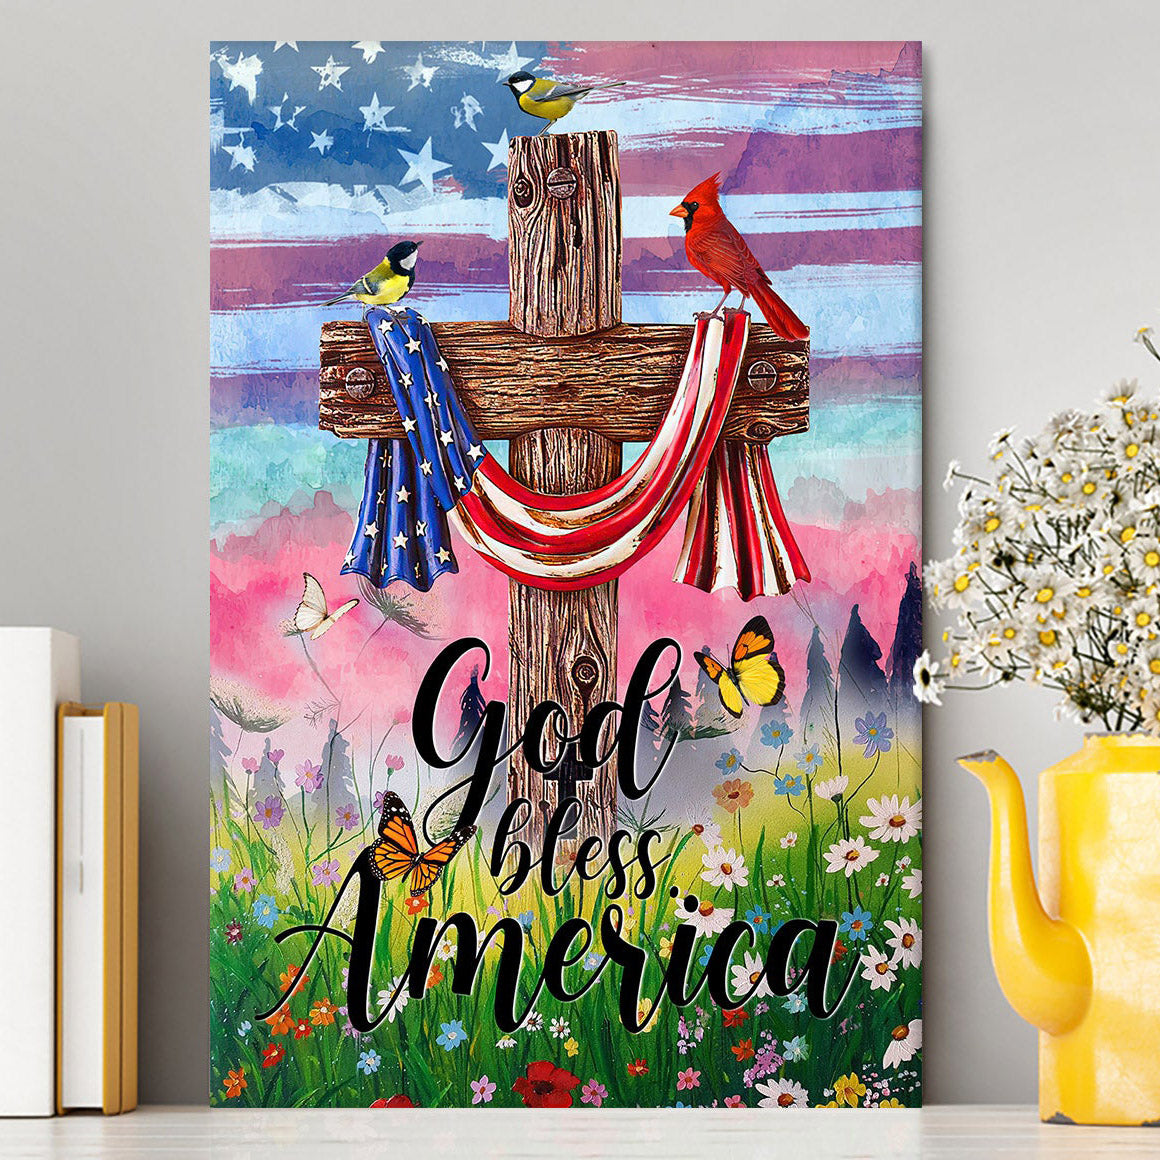 God Bless America Canvas Wall Art - Christian Wall Canvas - Religious Canvas Prints